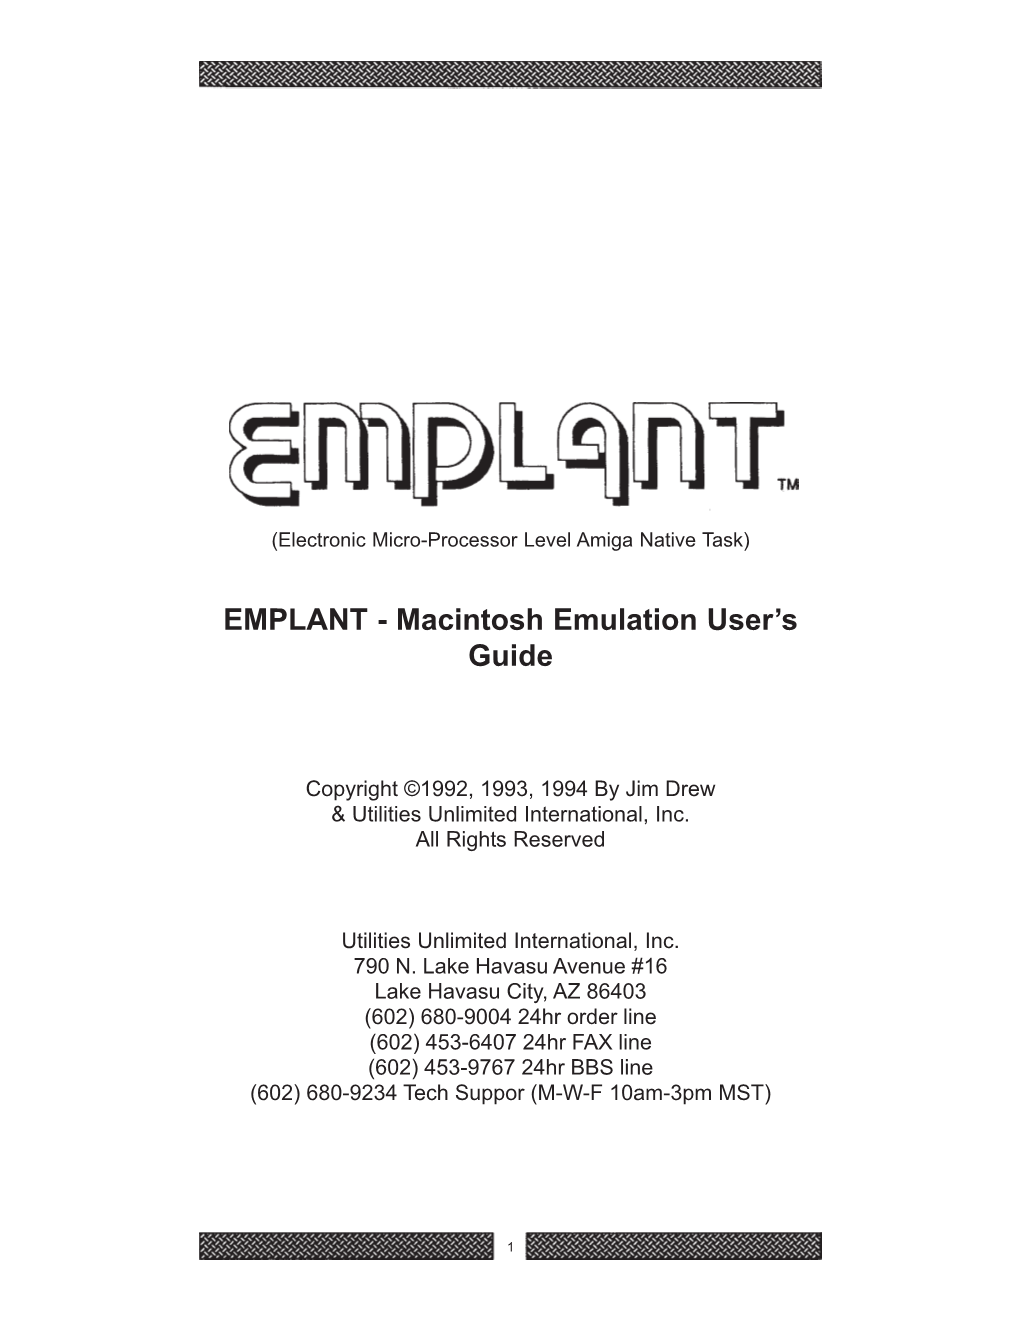 EMPLANT - Macintosh Emulation User’S Guide